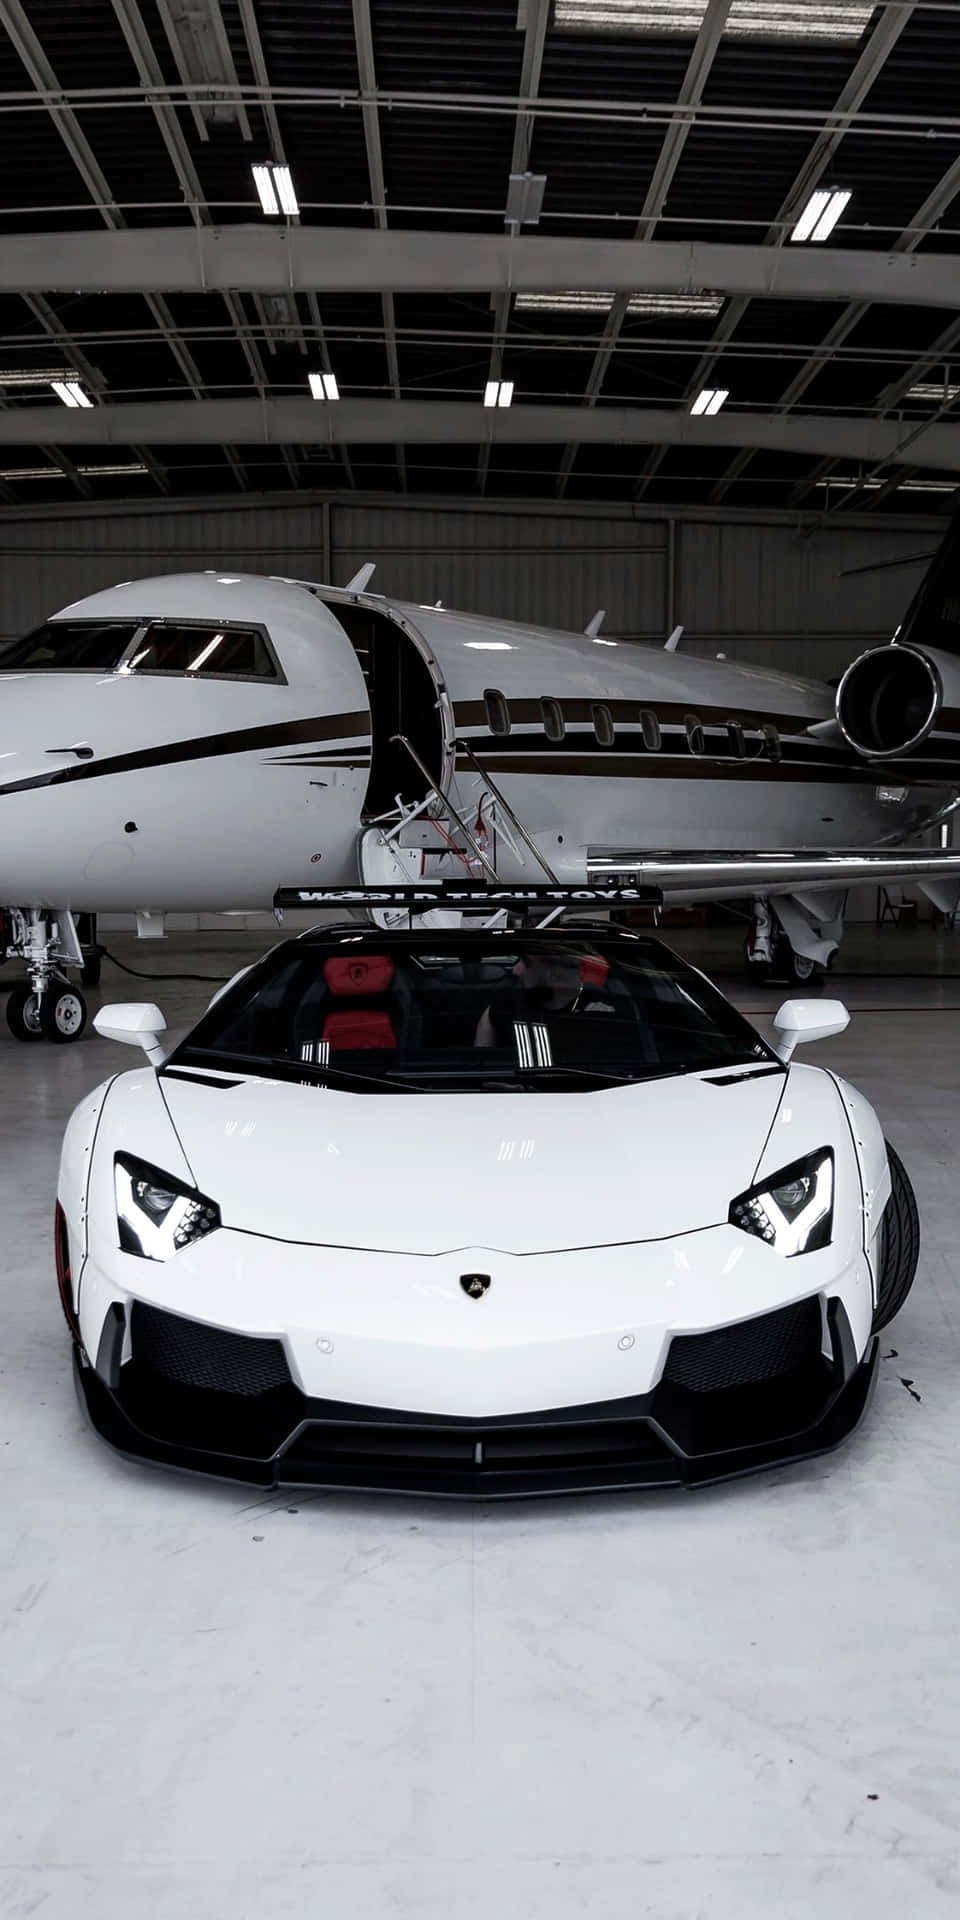 Power and Style - The Pixel 3 Lamborghini